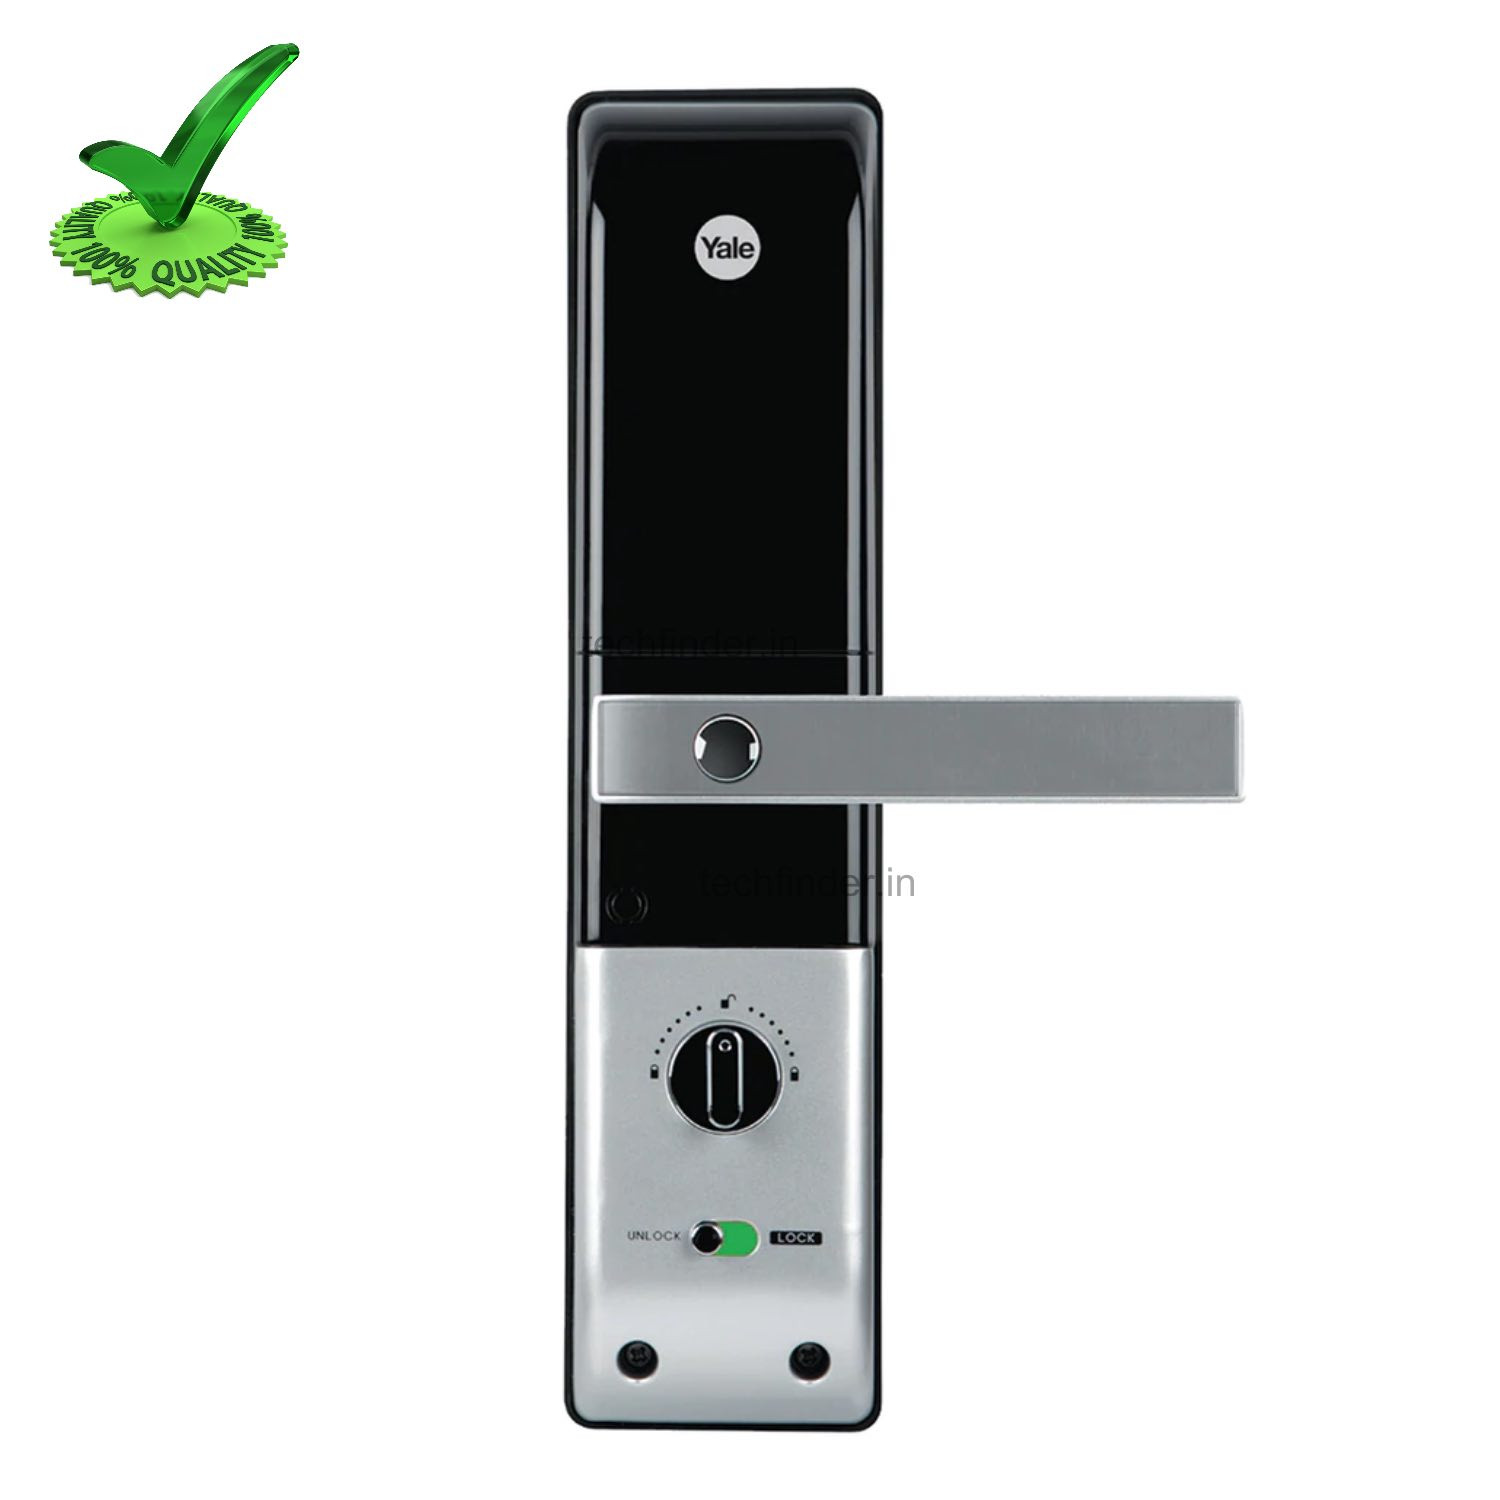 Yale YDM 4109A Digital Finger Print Door Lock